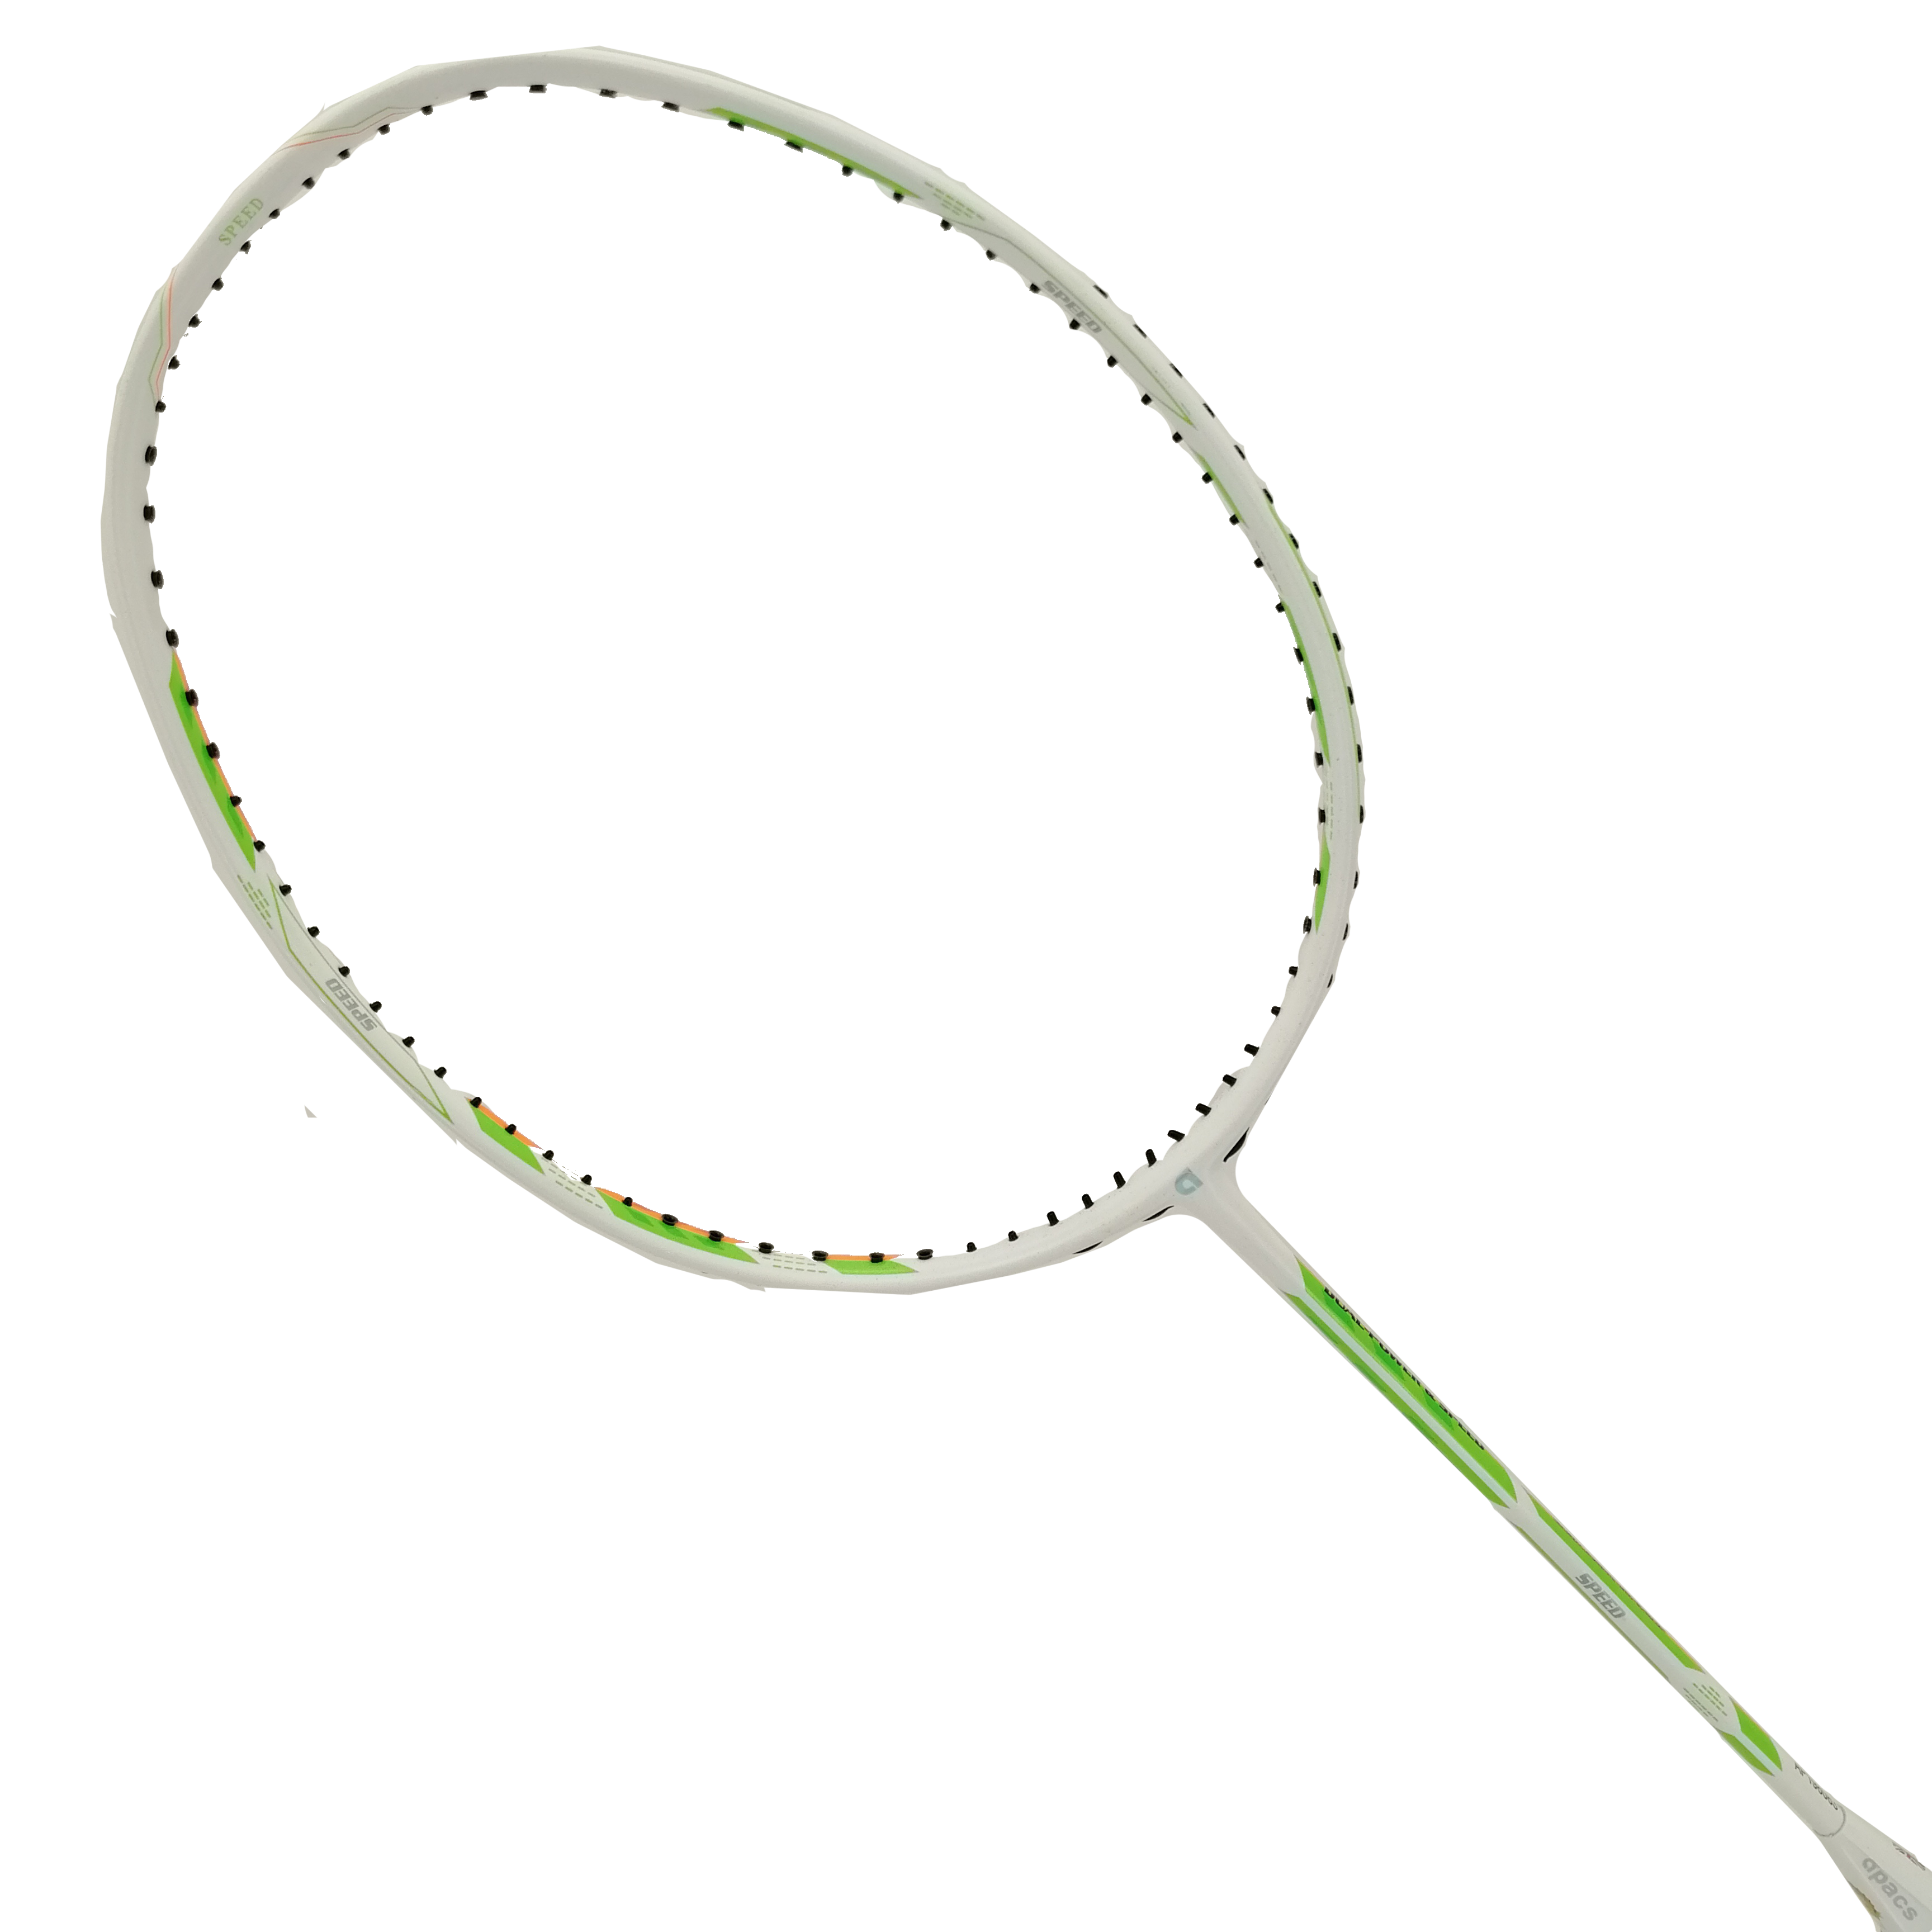 APACS Dual Power Speed Badminton Racket (White)+ Free String & Grip ...